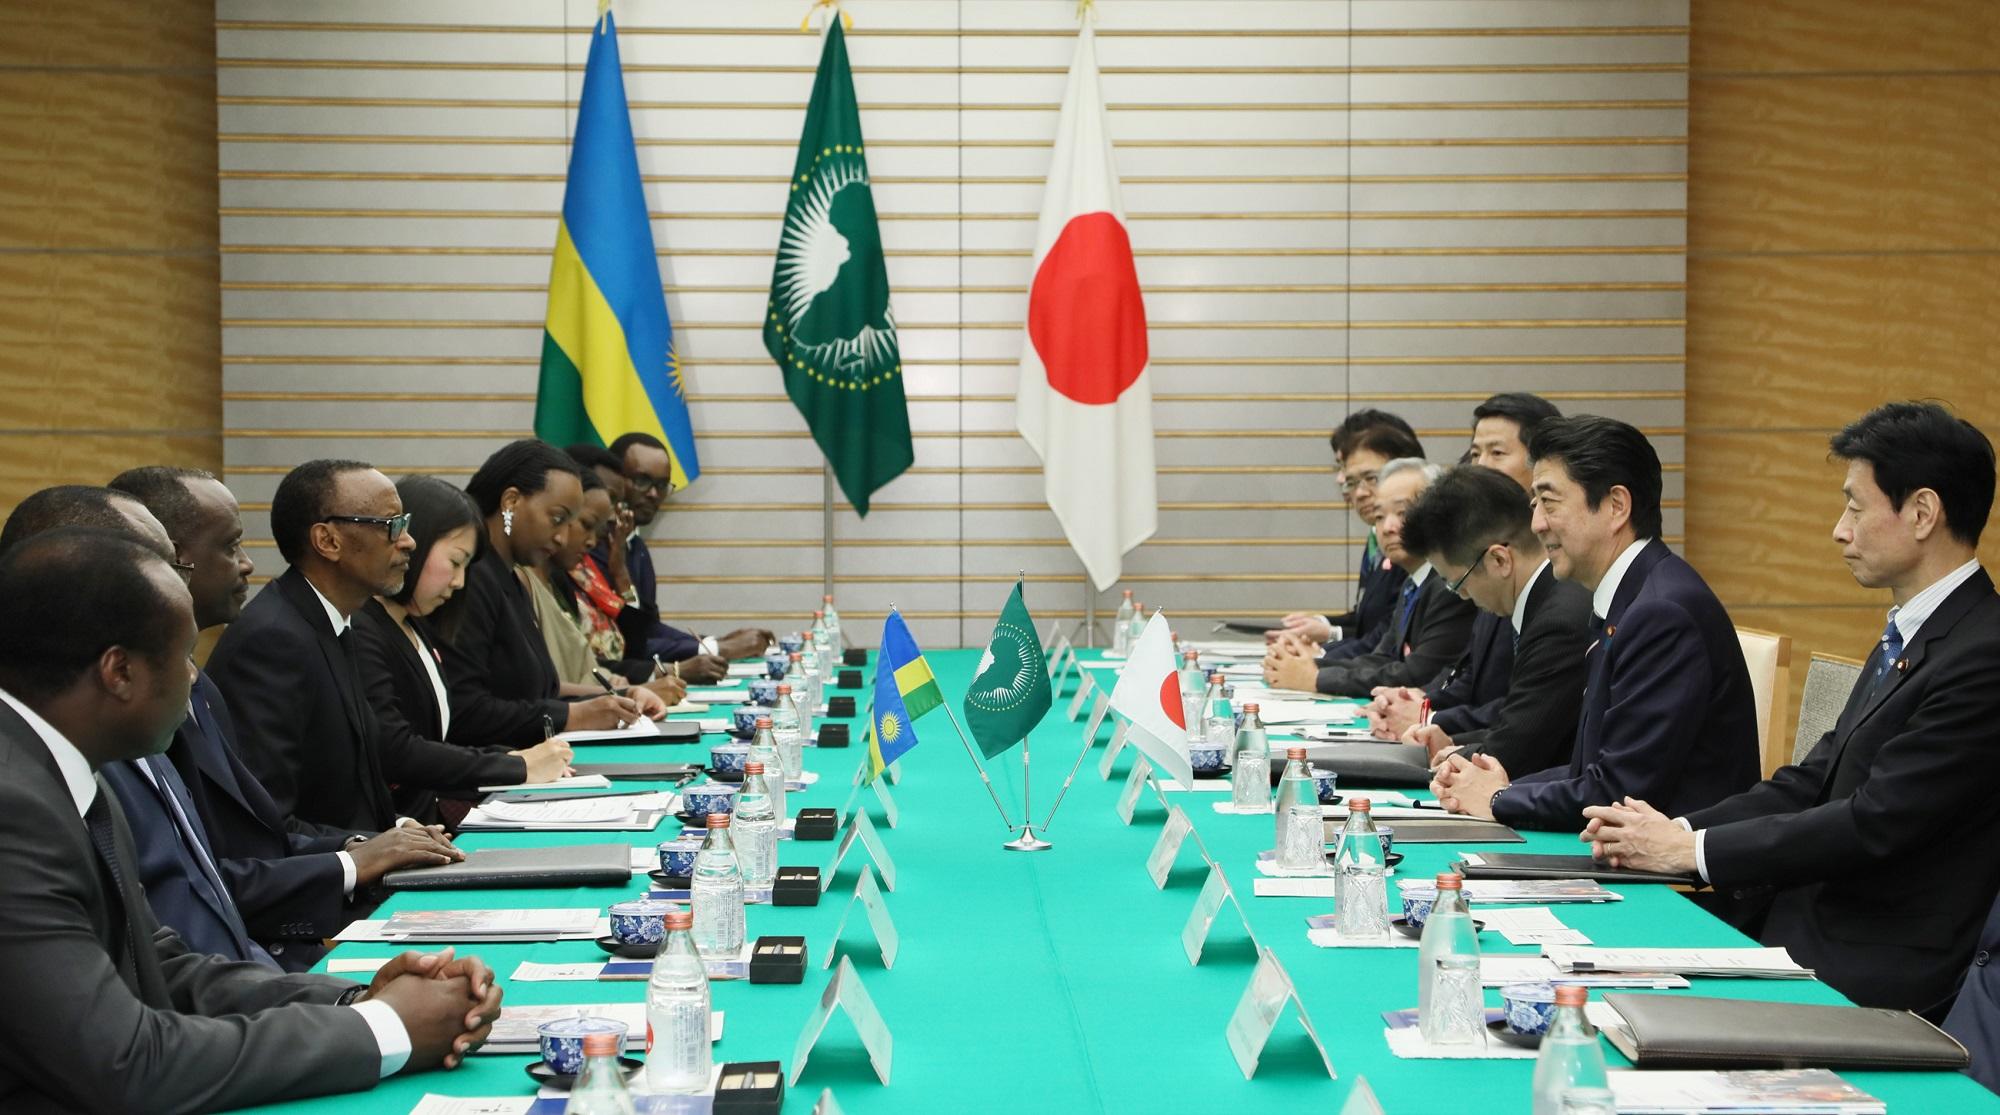 Photograph of the Japan-Rwanda Summit Meeting